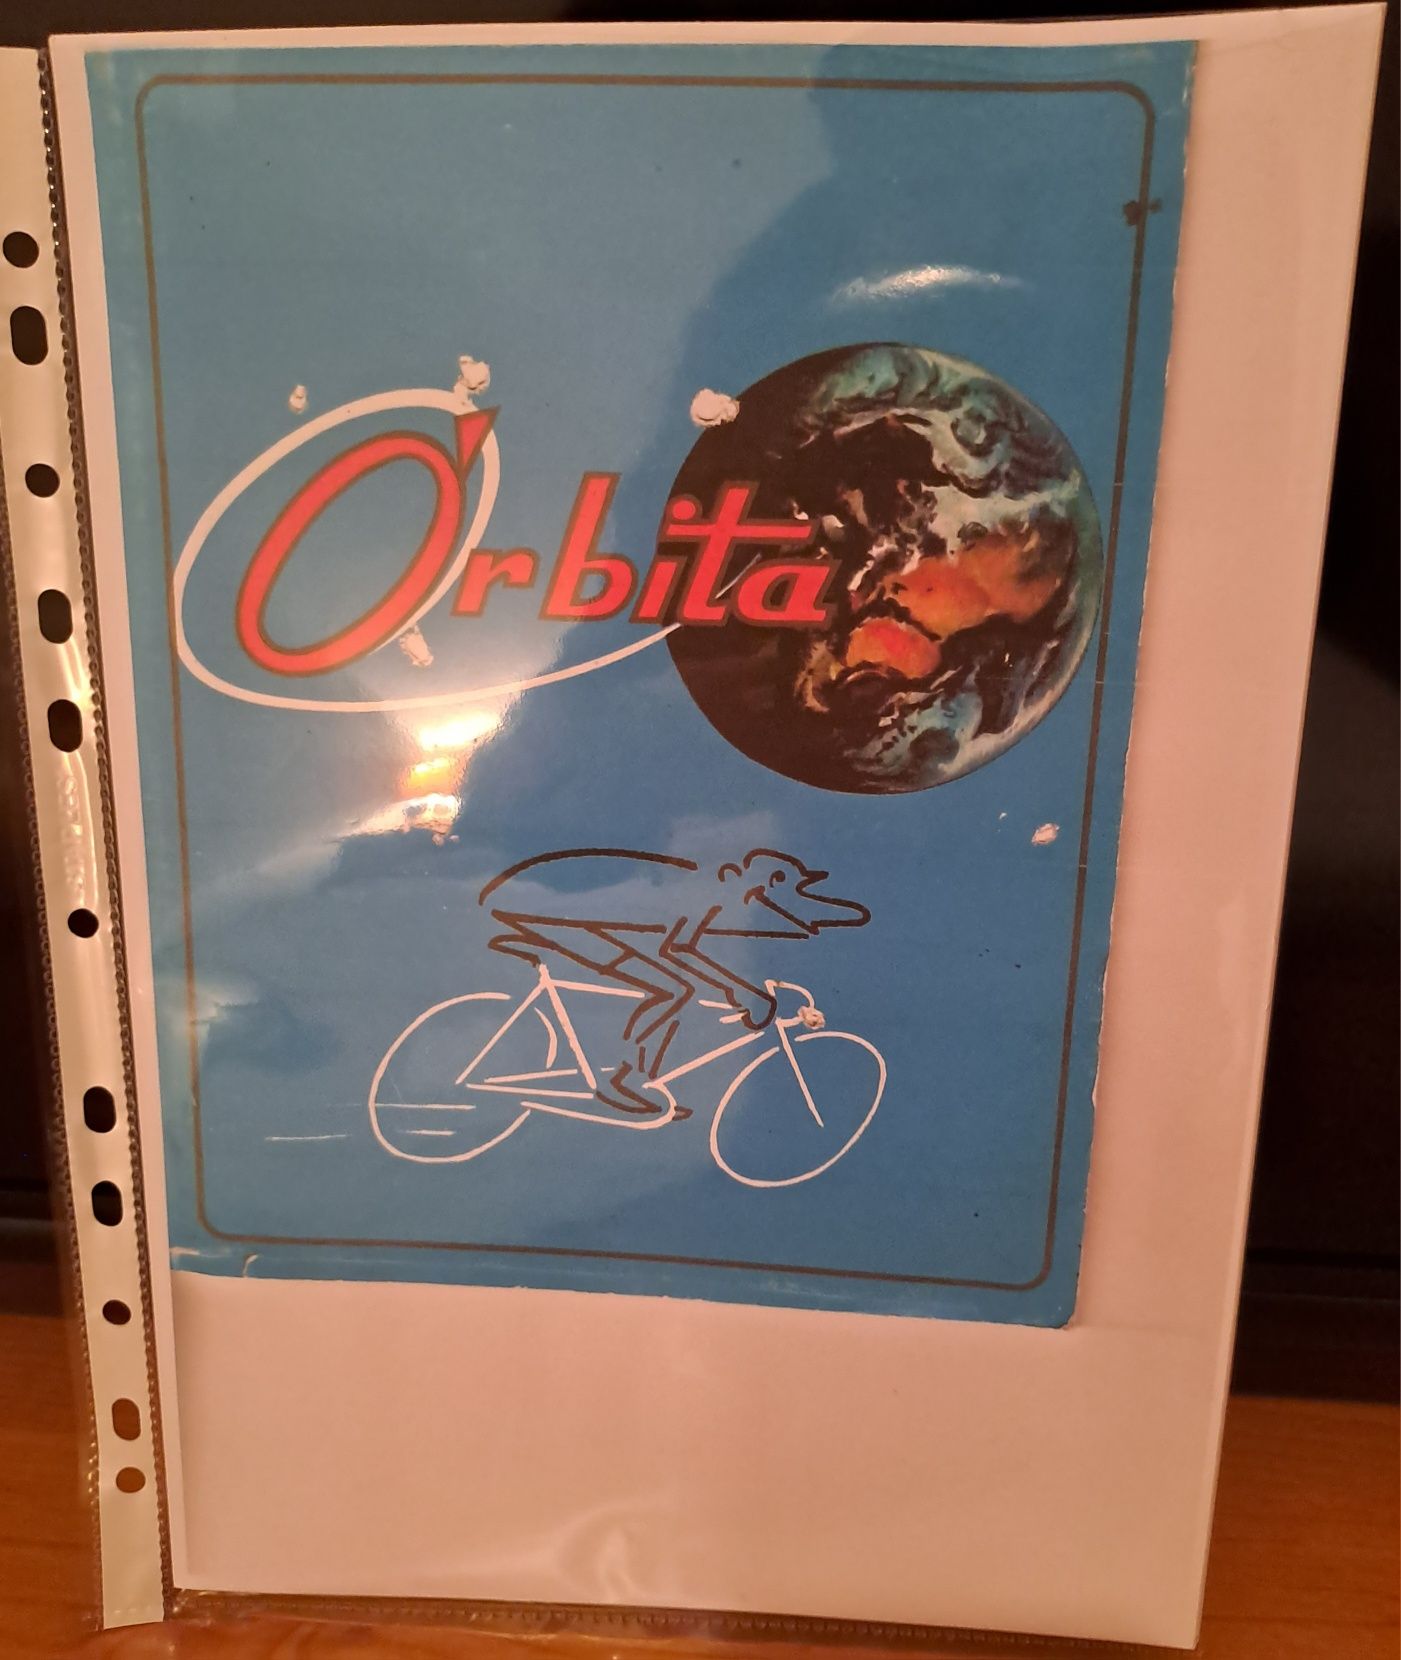 3 Catálogos antigos Bicicletas Esmaltina e Órbitas [FOTOCÓPIAS]